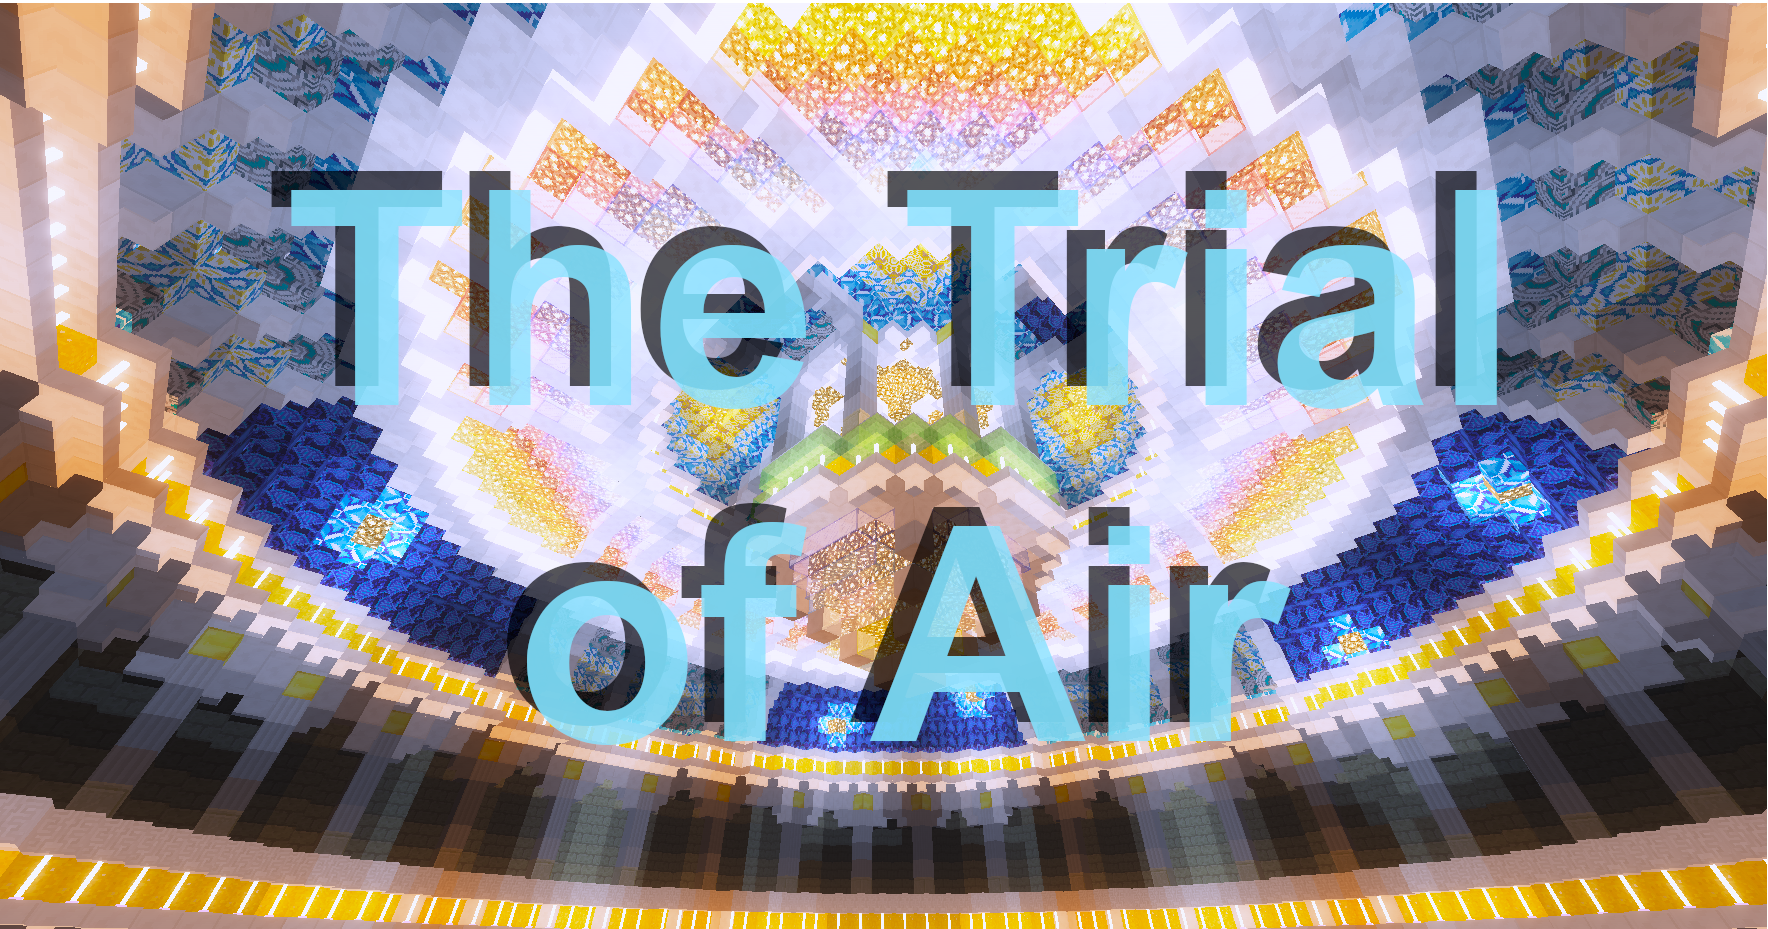 Unduh The Trial of Air untuk Minecraft 1.12.2